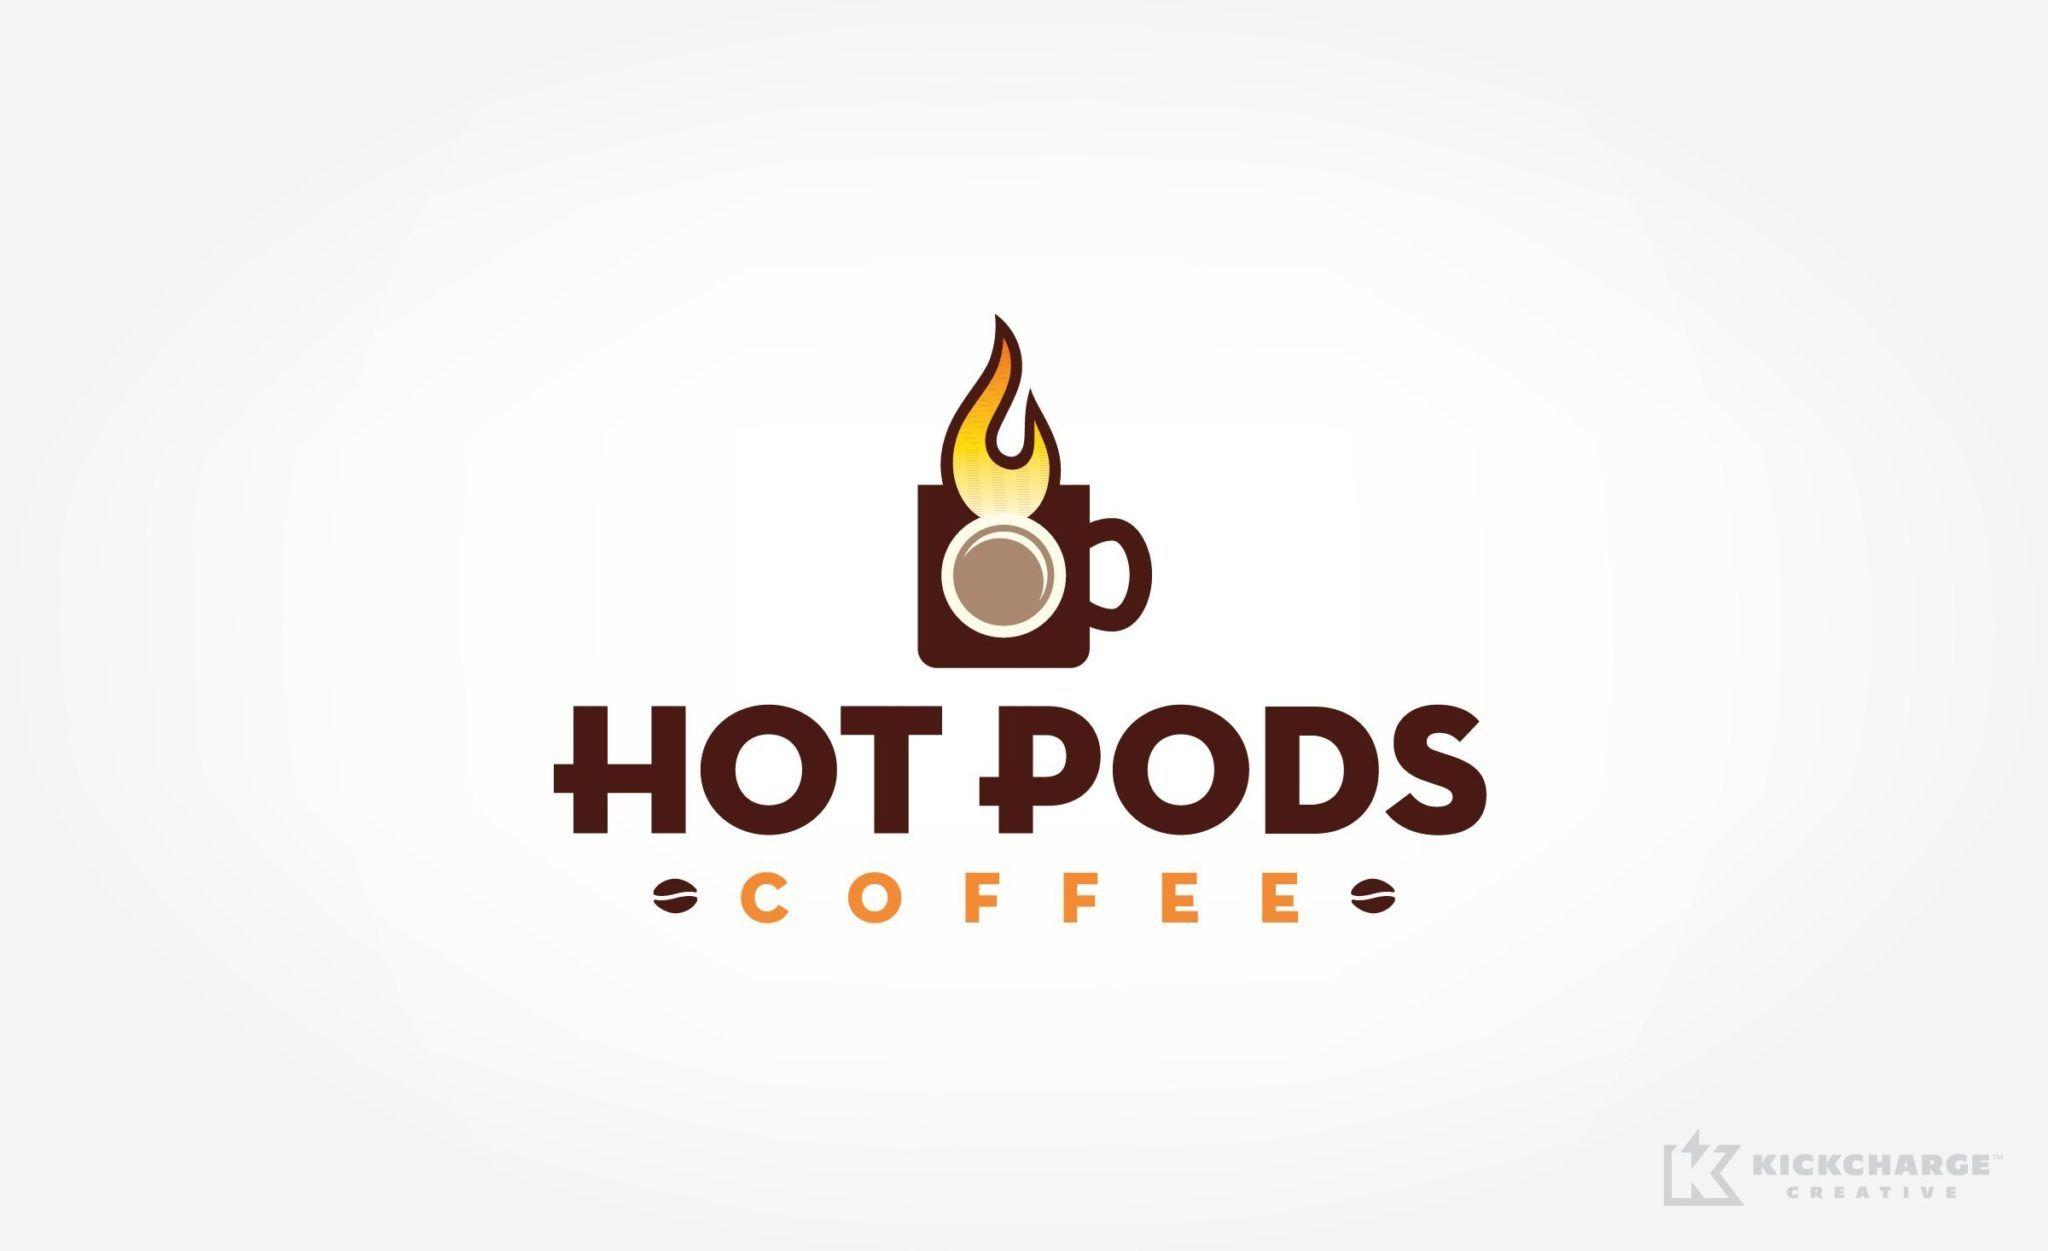 Pods Logo - Hot Pods Coffee Creative. kickcharge.com. KickCharge